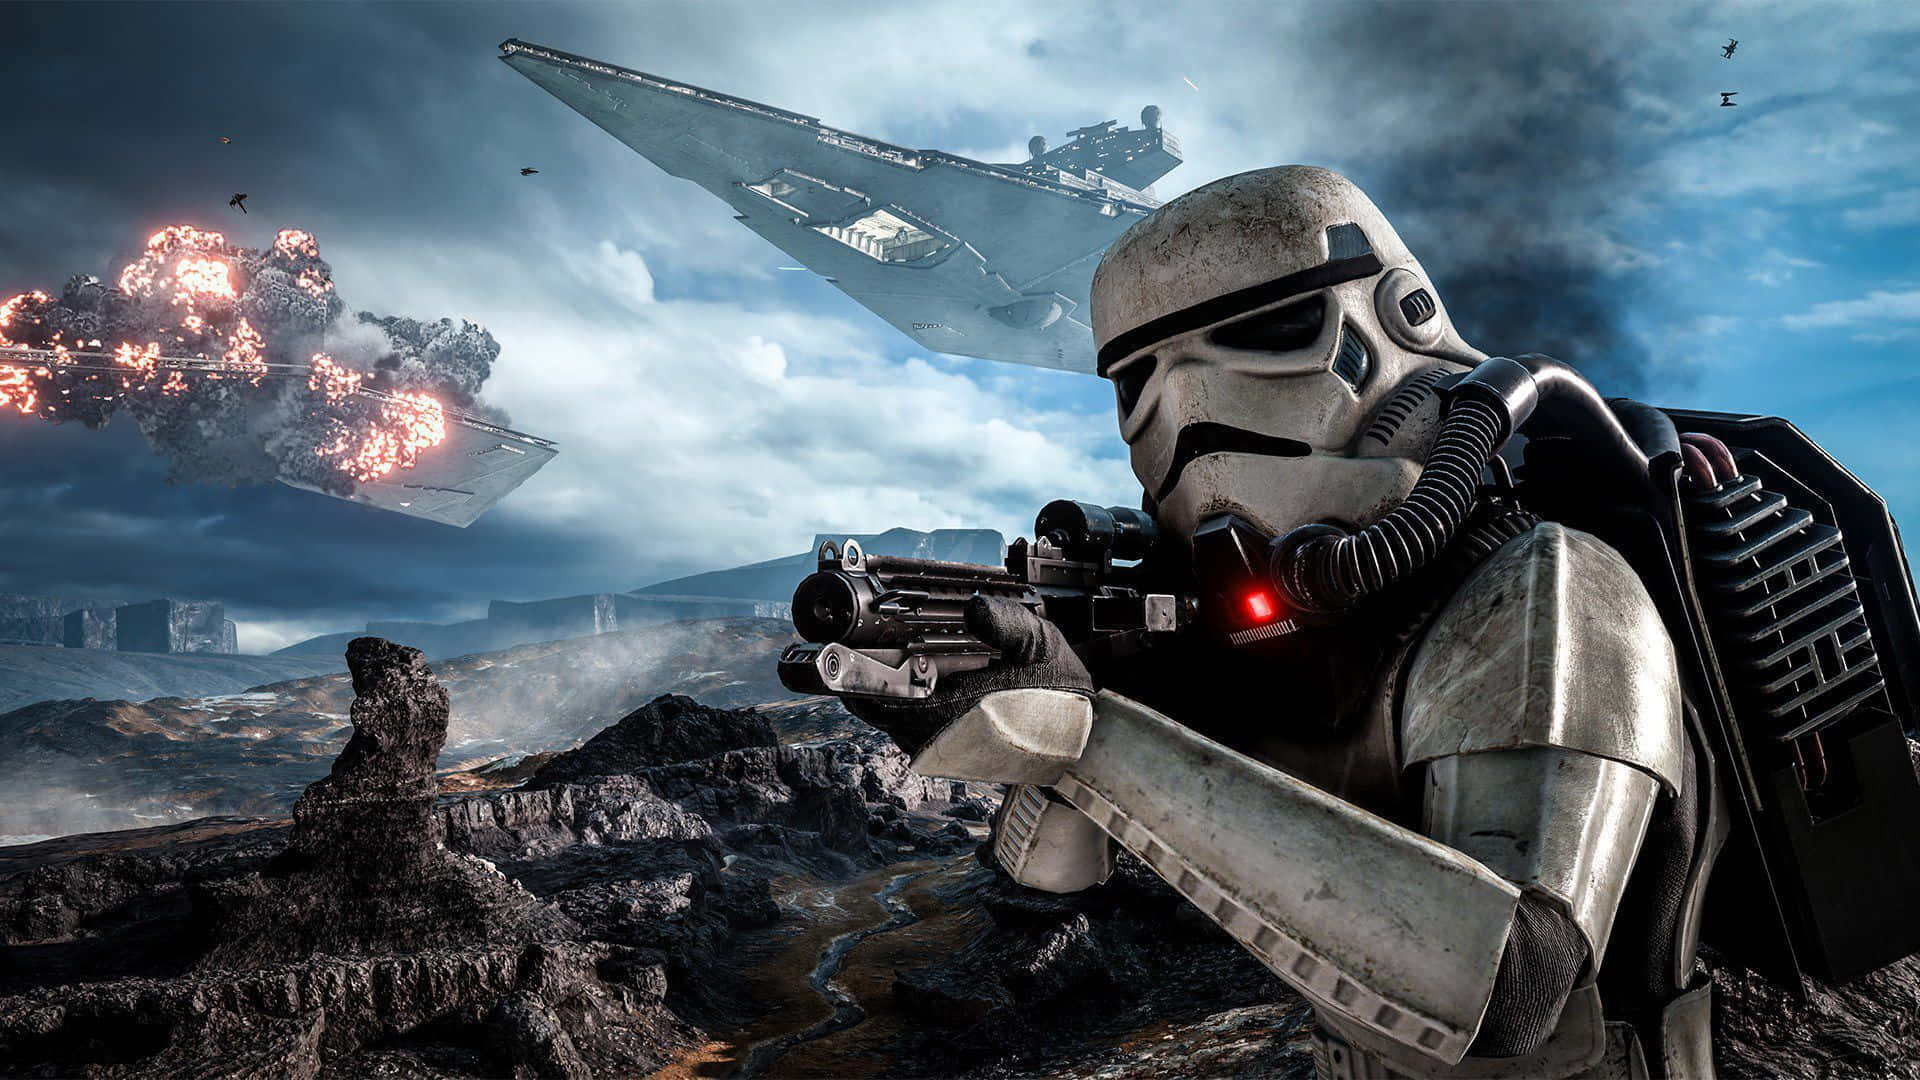 Imagemdos Stormtroopers De Star Wars Em Batalha